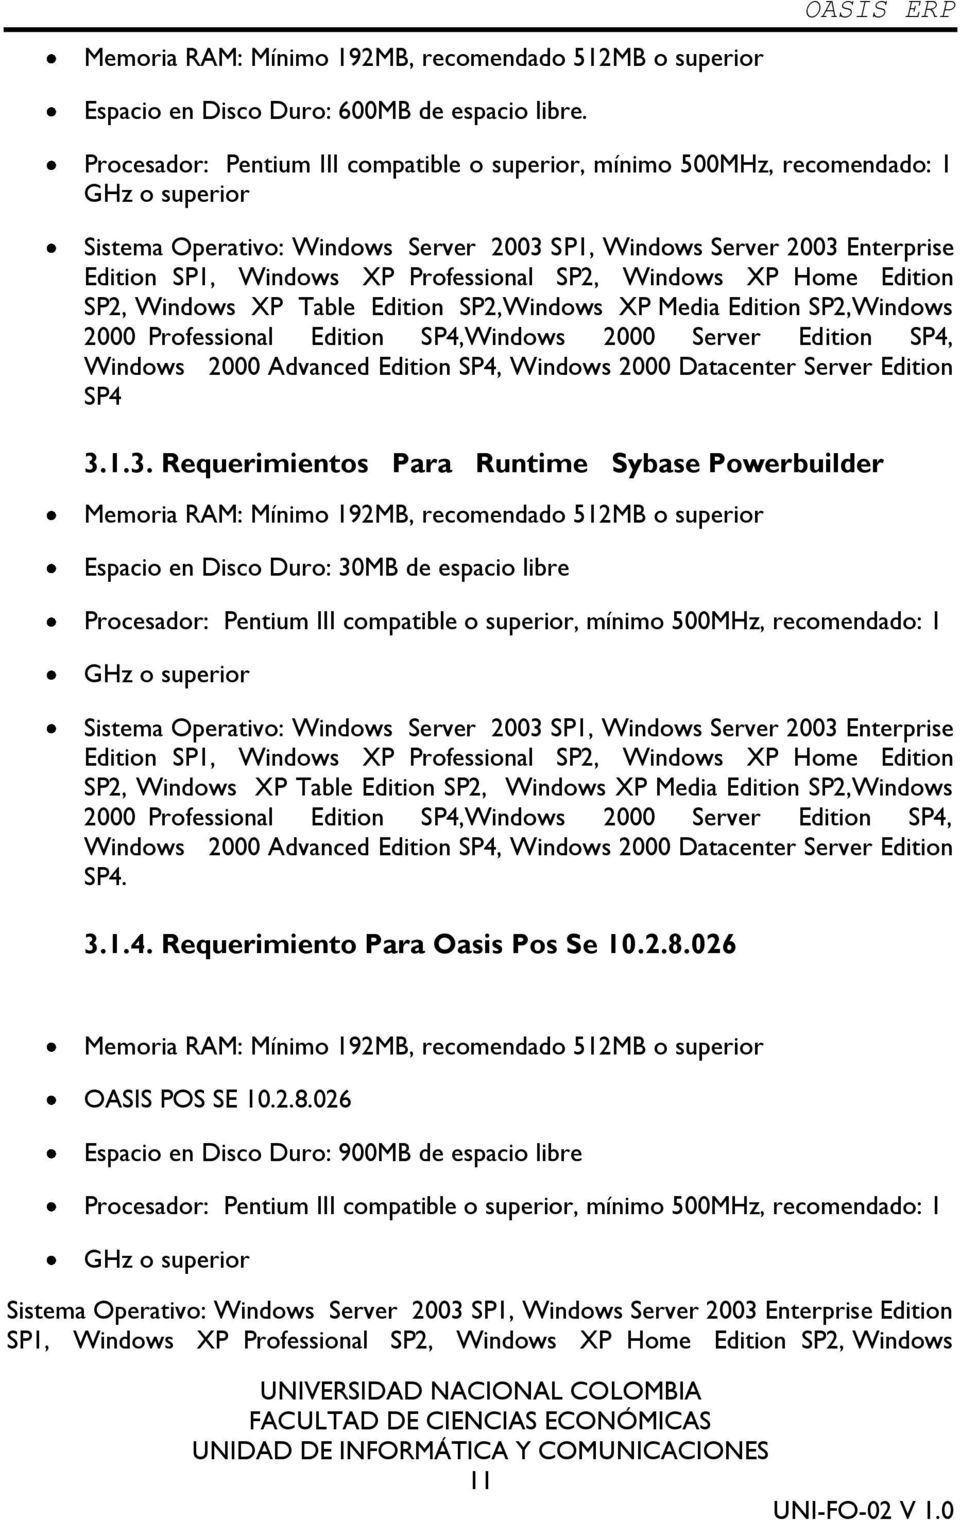 Professional SP2, Windows XP Home Edition SP2, Windows XP Table Edition SP2,Windows XP Media Edition SP2,Windows 2000 Professional Edition SP4,Windows 2000 Server Edition SP4, Windows 2000 Advanced